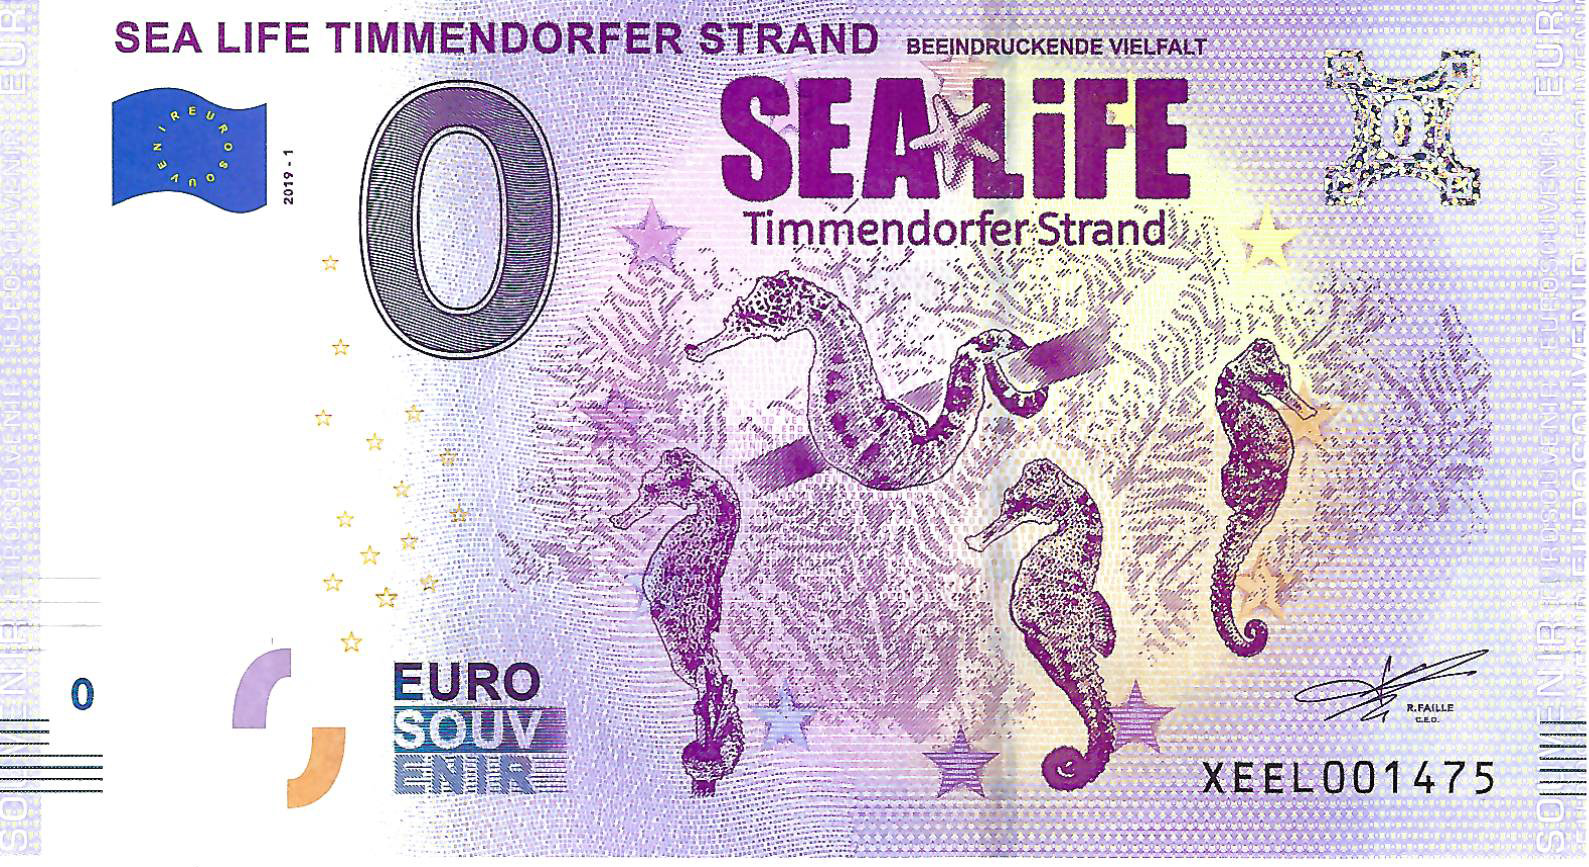 0 Euro biljet Duitsland 2019 - Sea Life Timmendorfer Strand